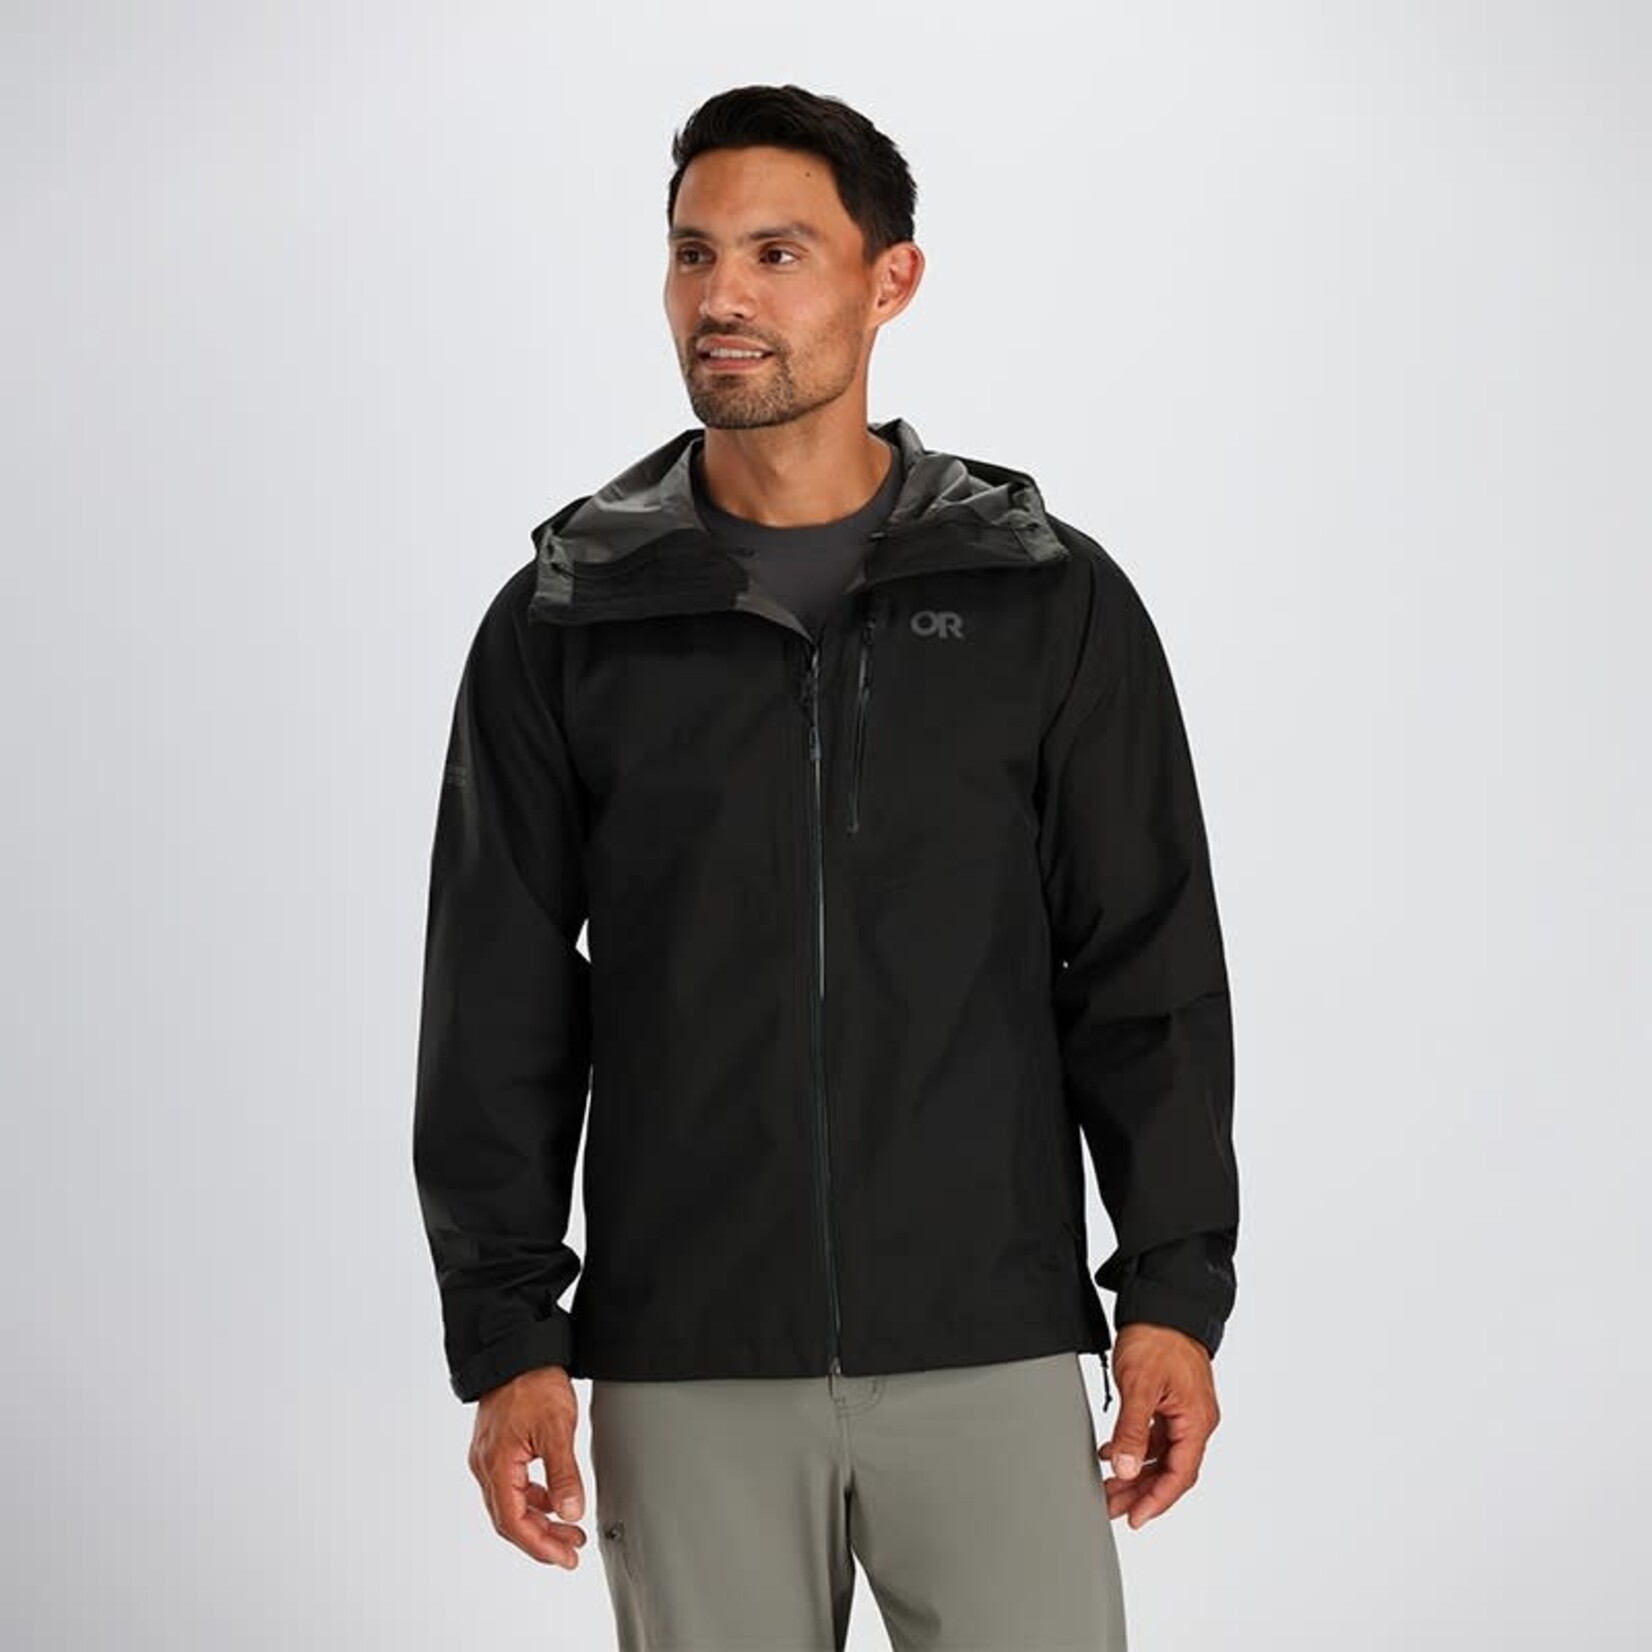 Outdoor Research Men's Foray II Jacket (manteau pour homme)